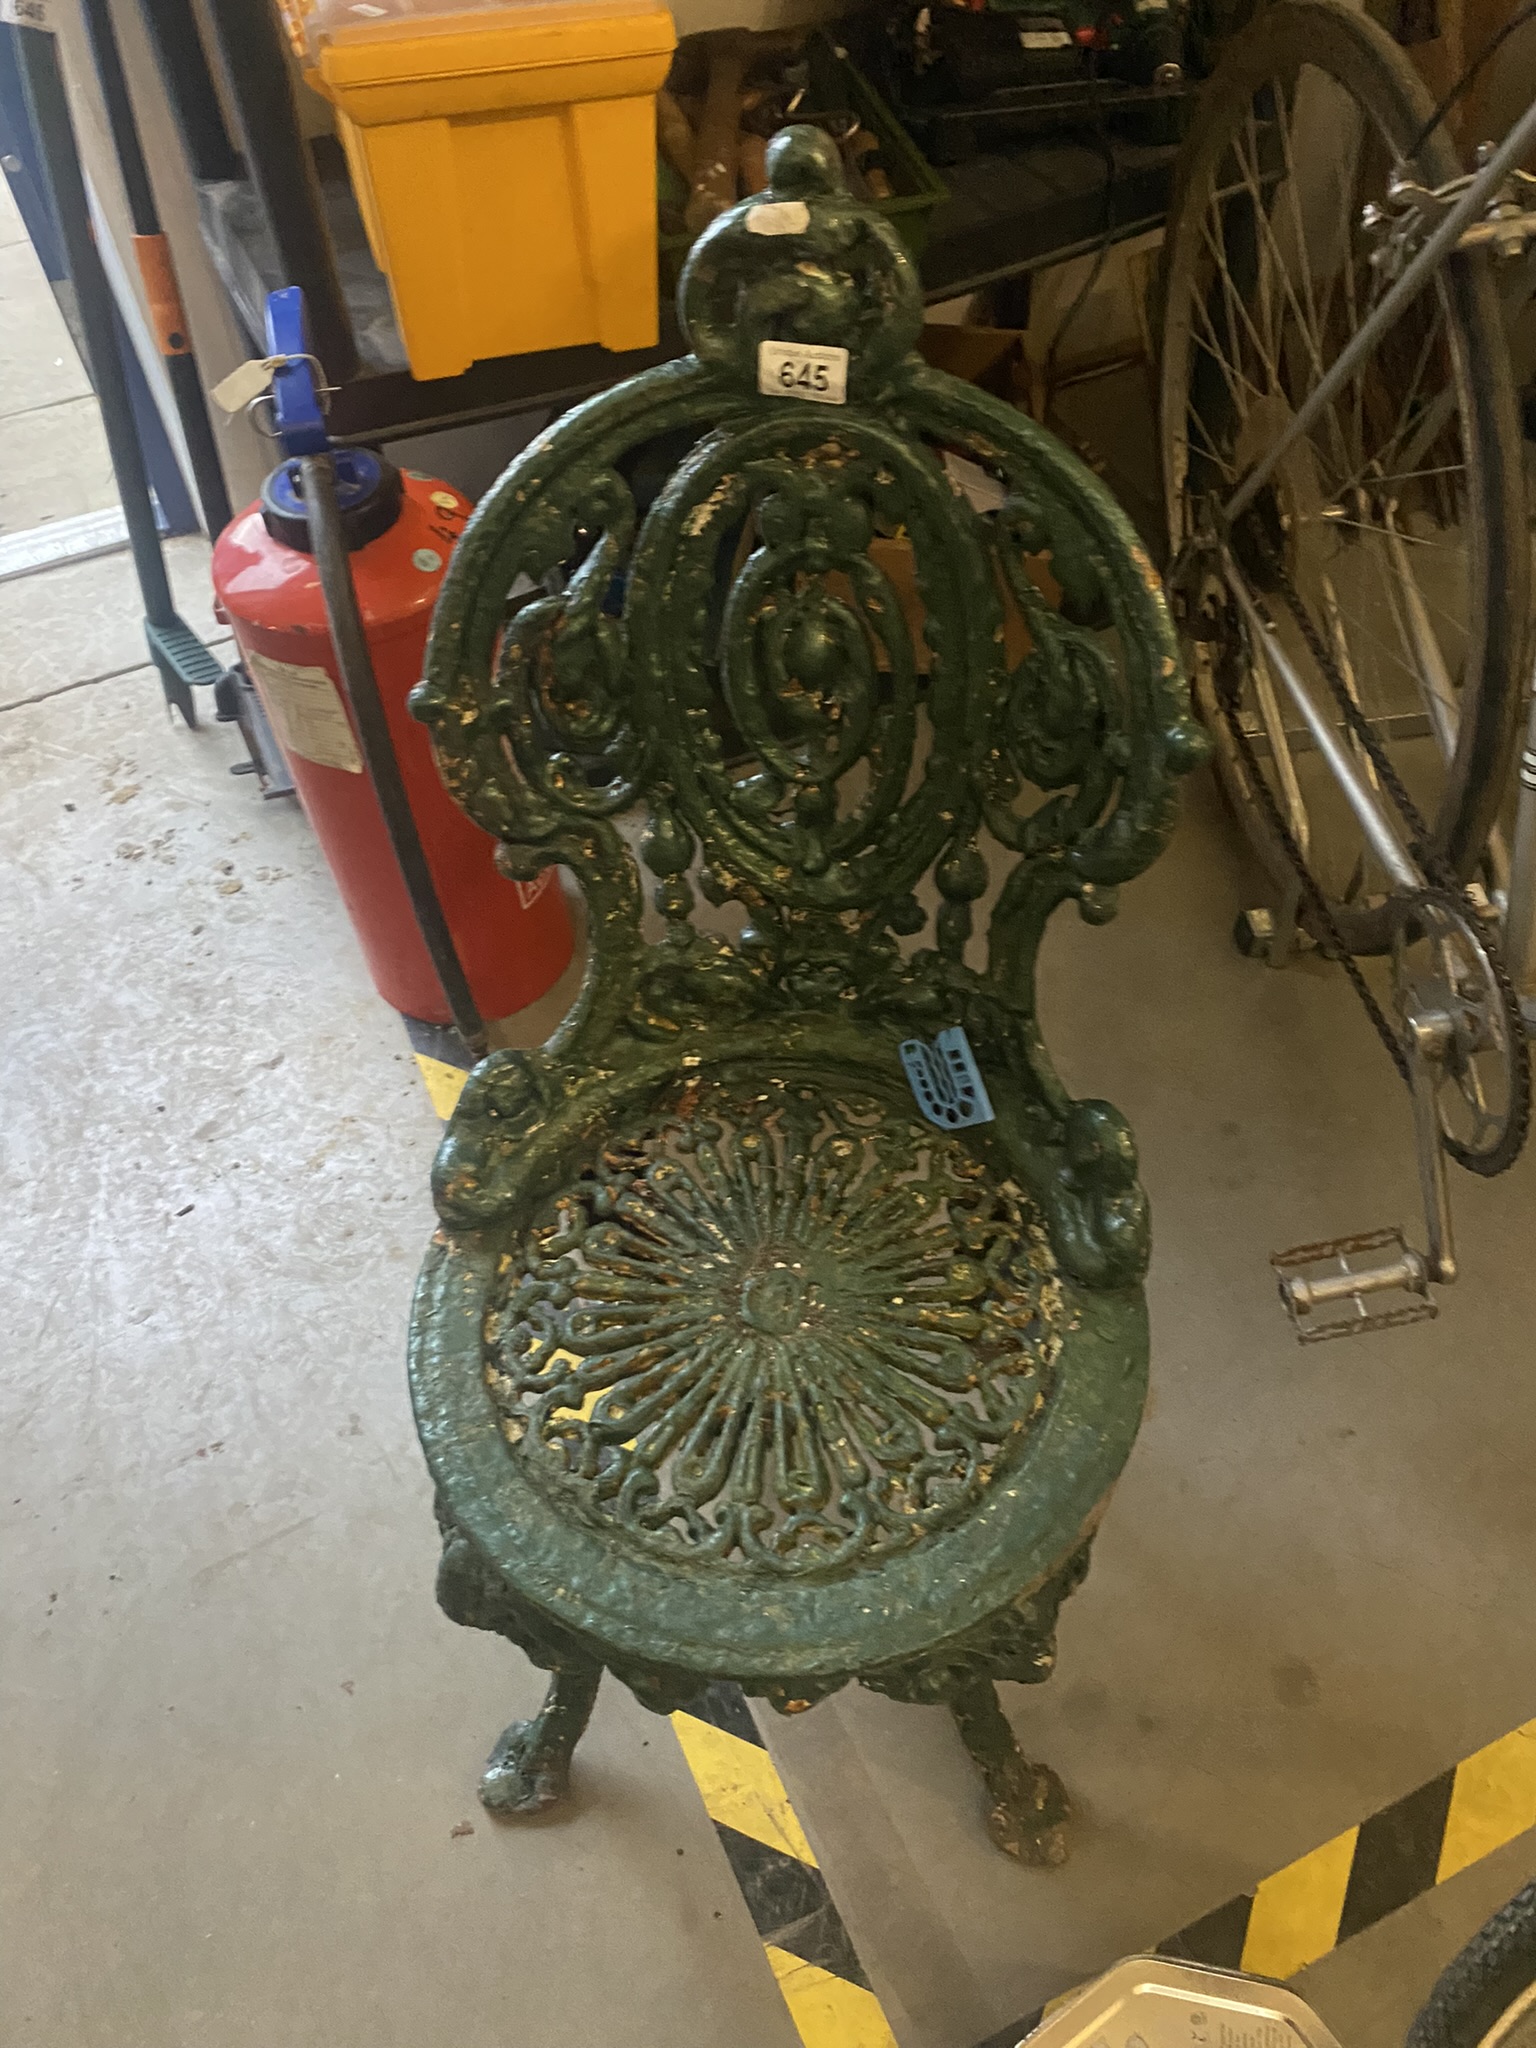 A vintage metal garden chair